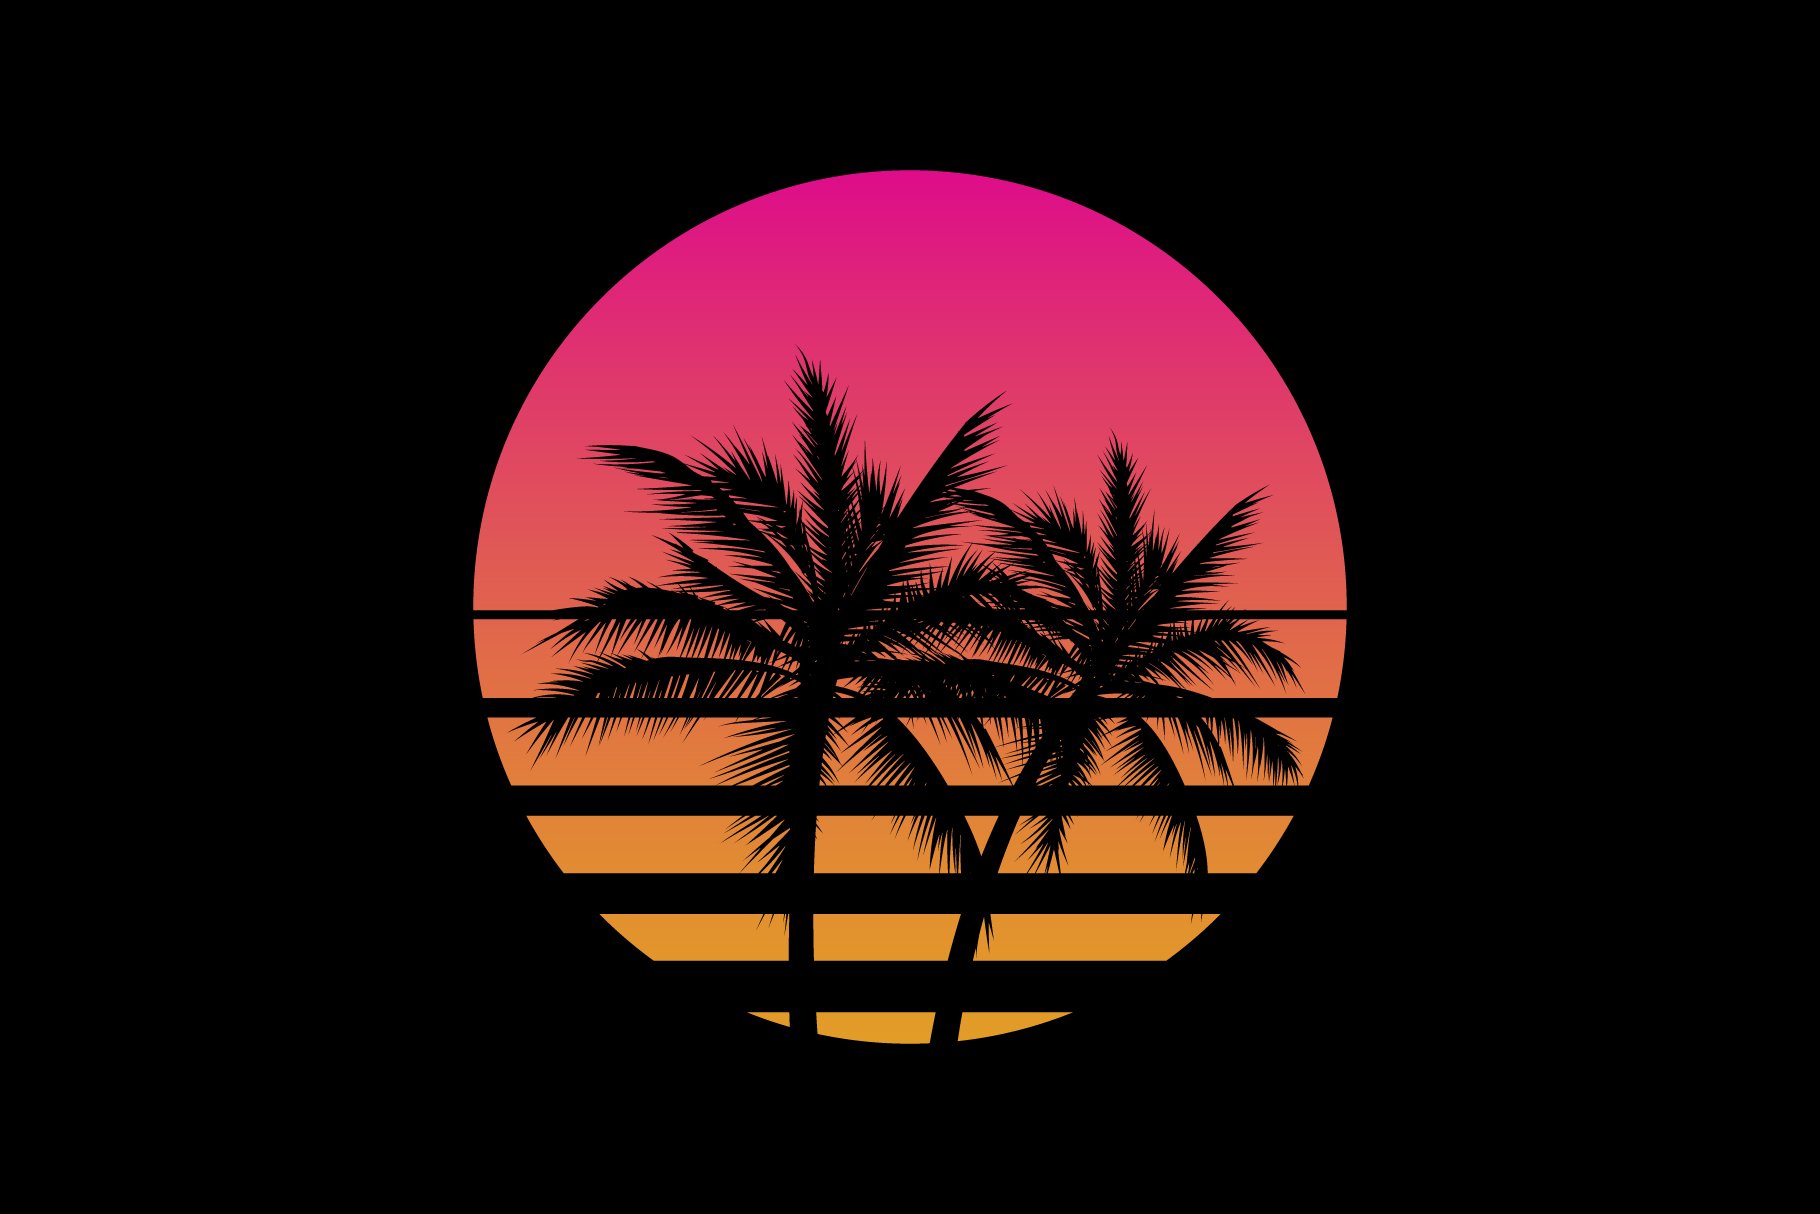 Vaporwave Palms Sunset cover image.